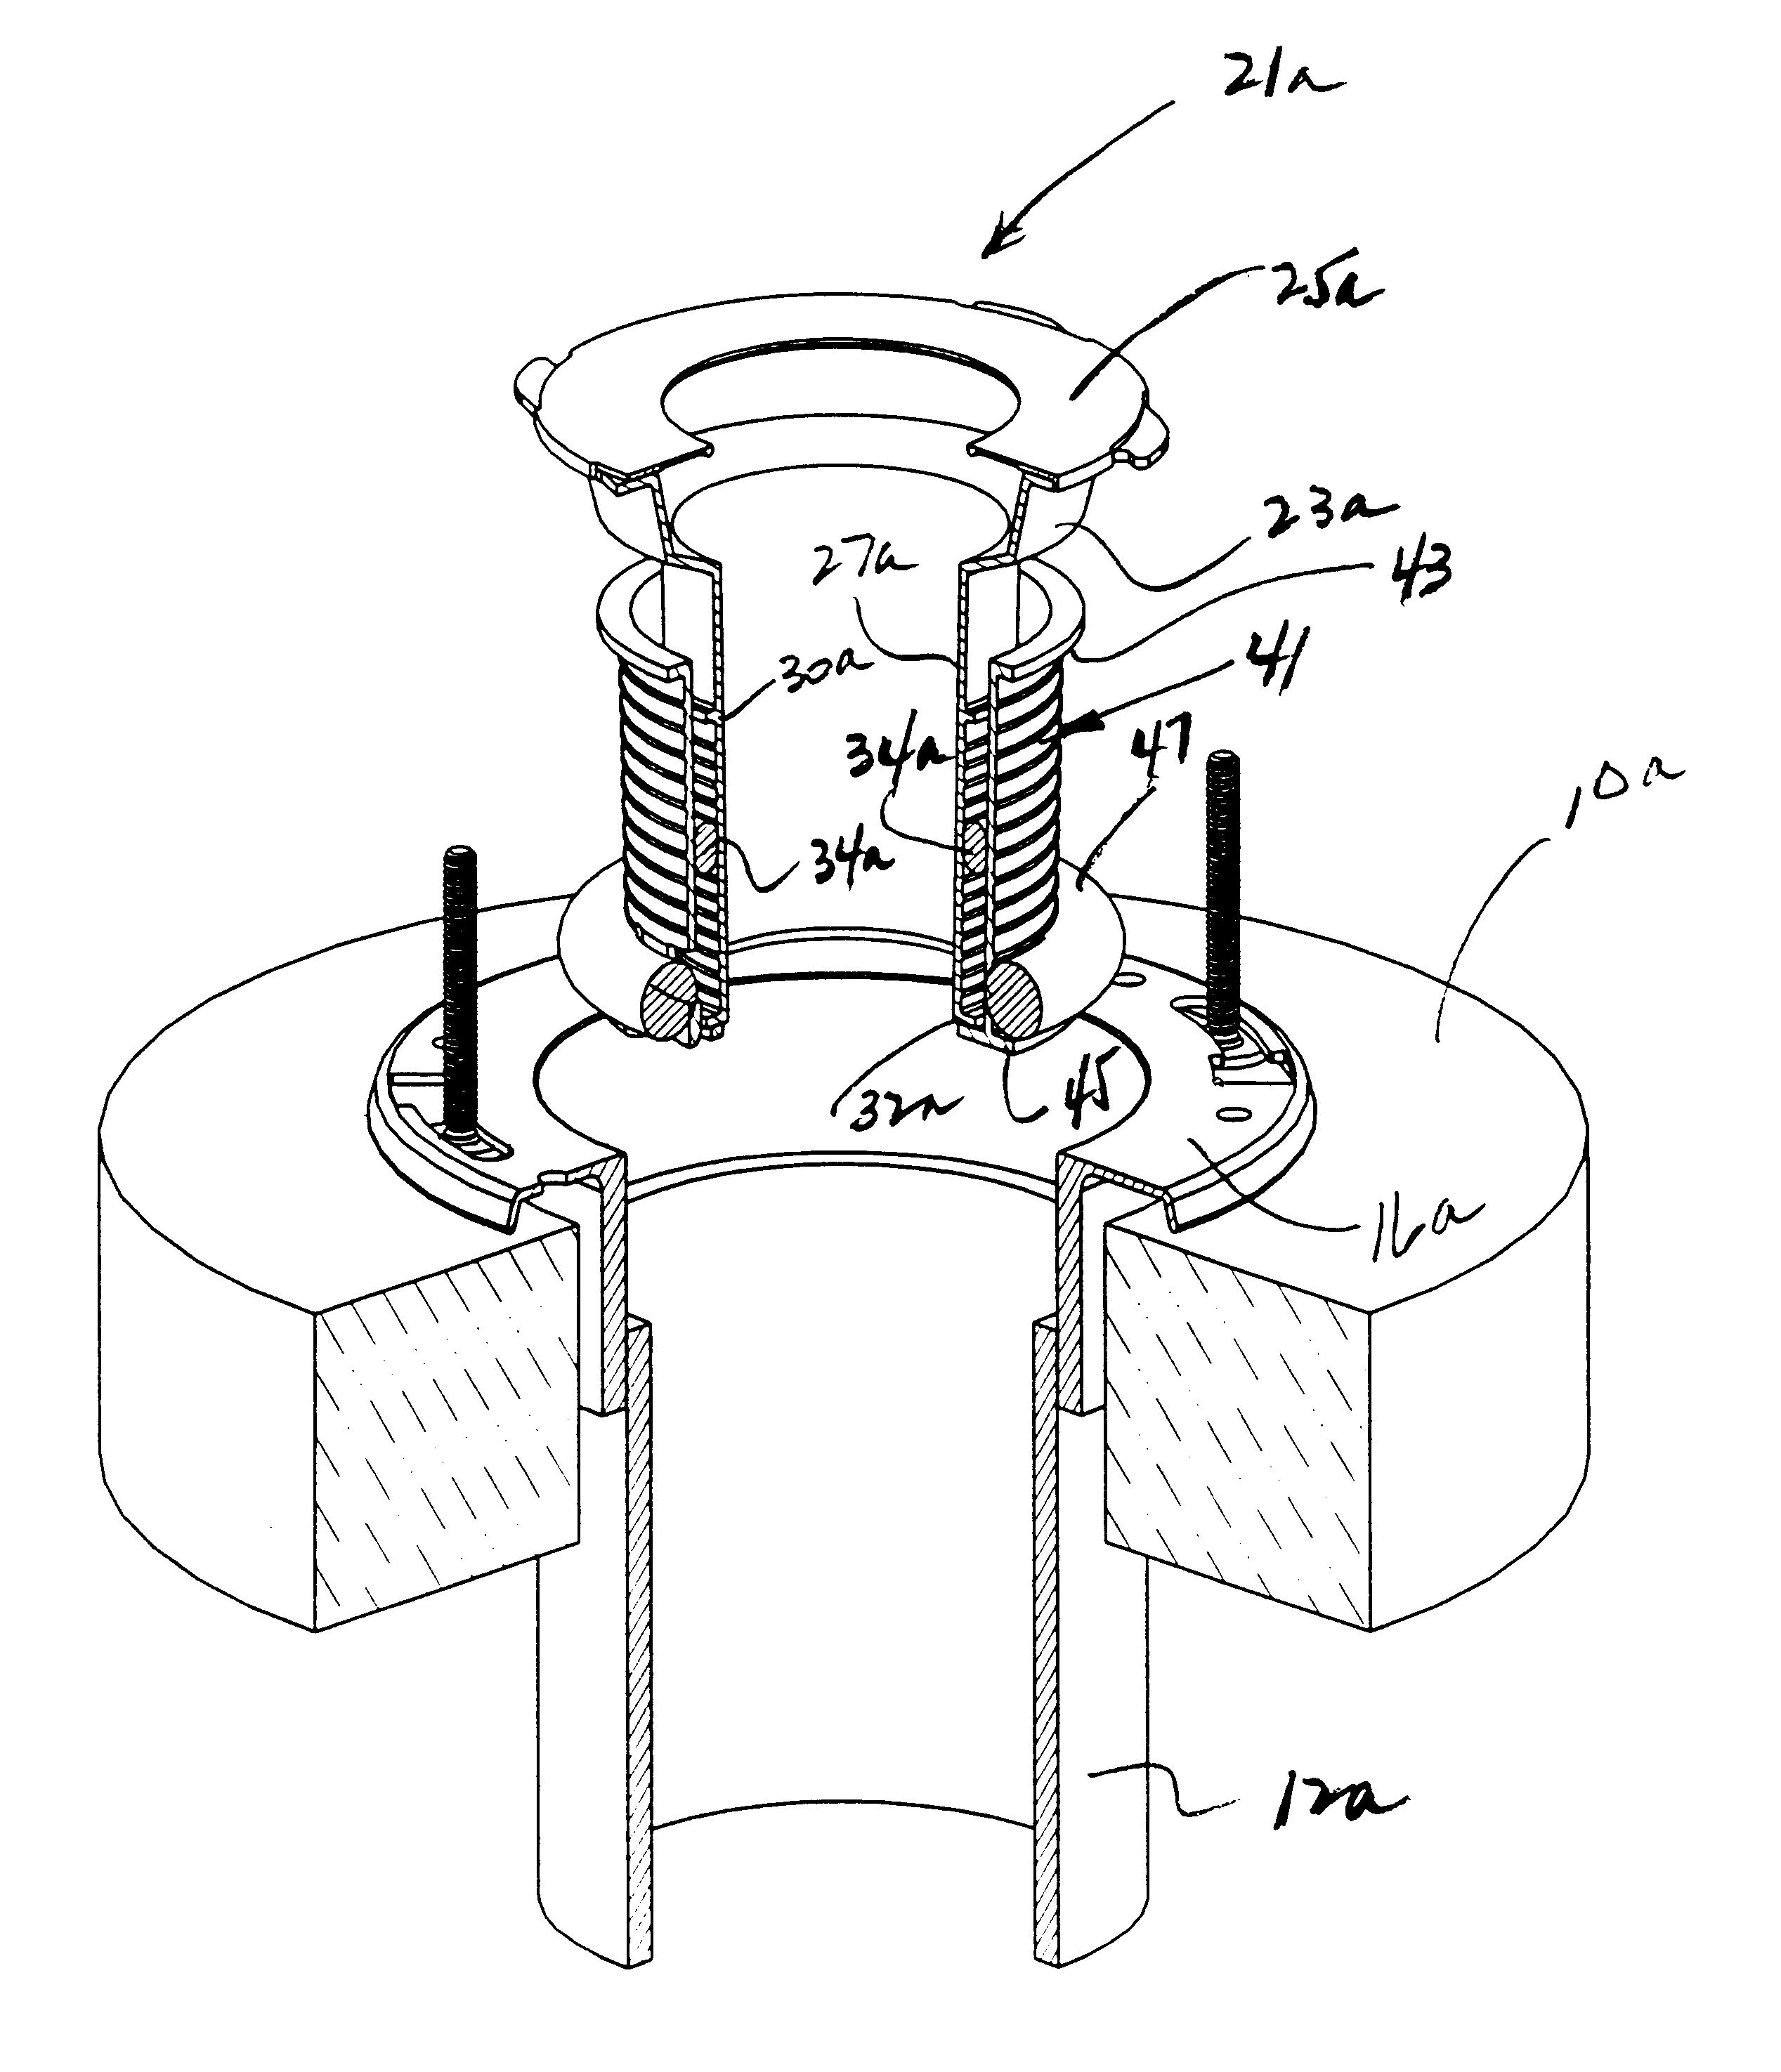 Bathroom fixture gasket apparatus and method